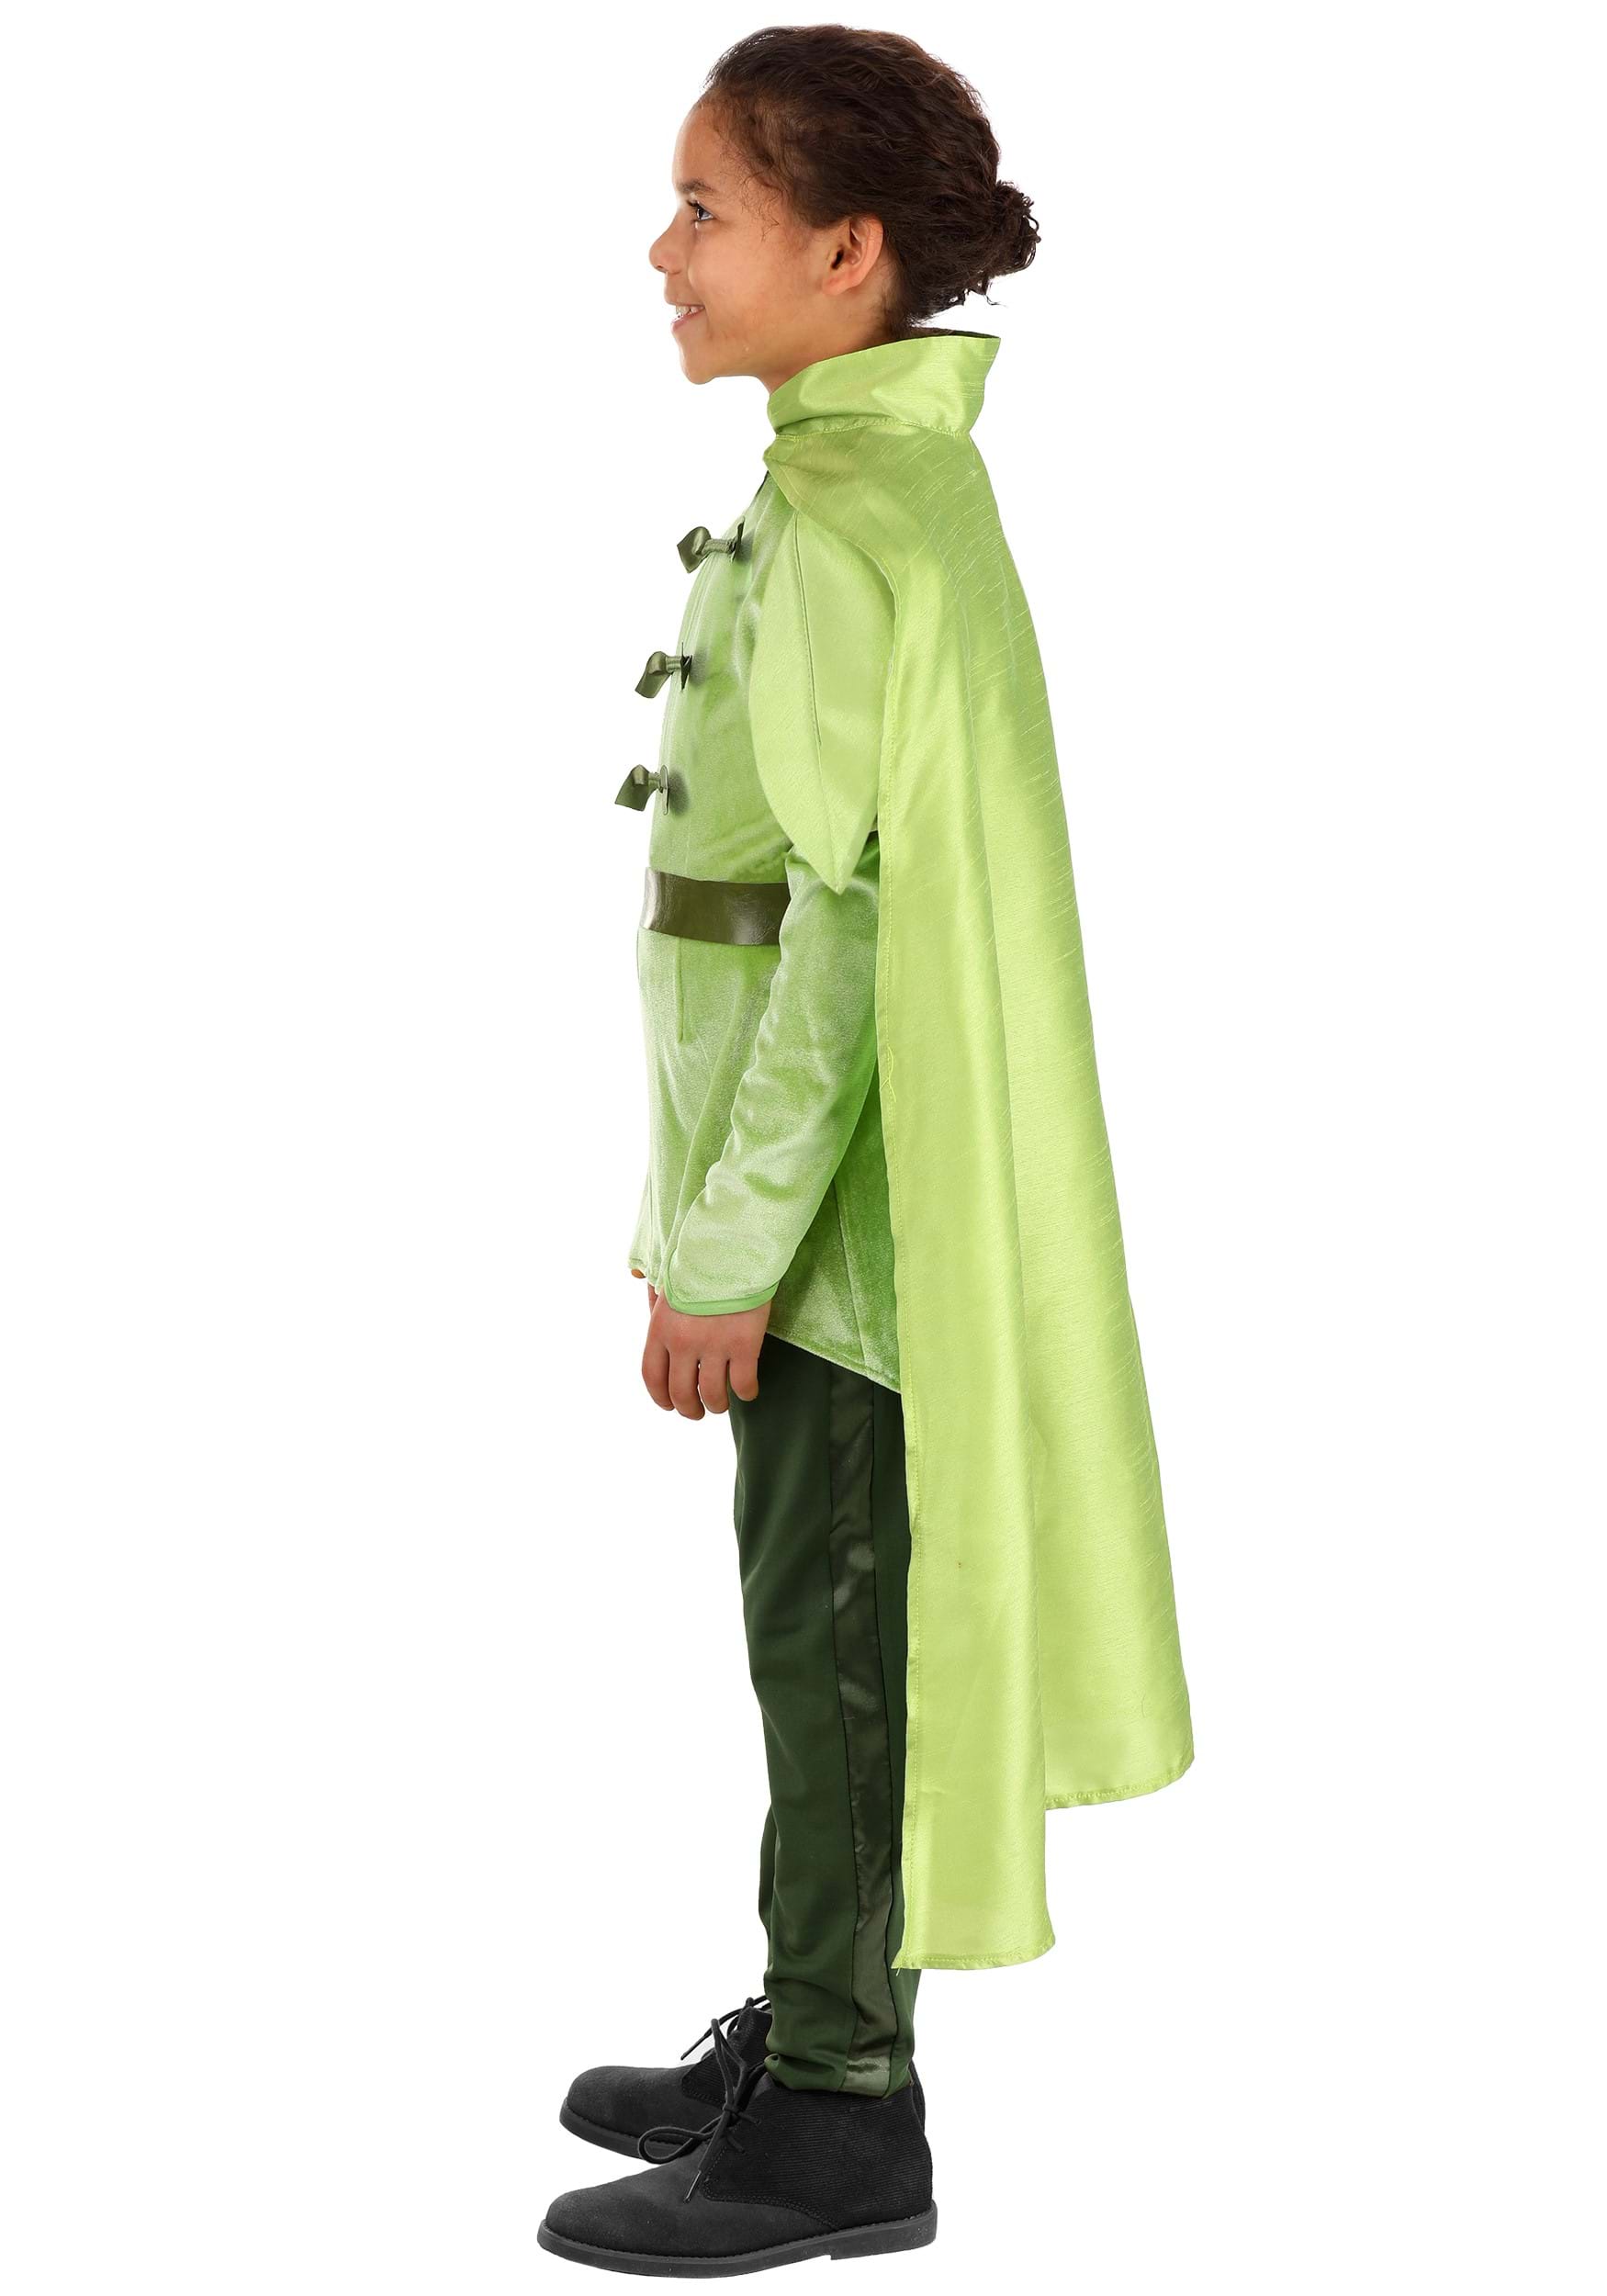 Kid's Disney Prince Naveen Costume